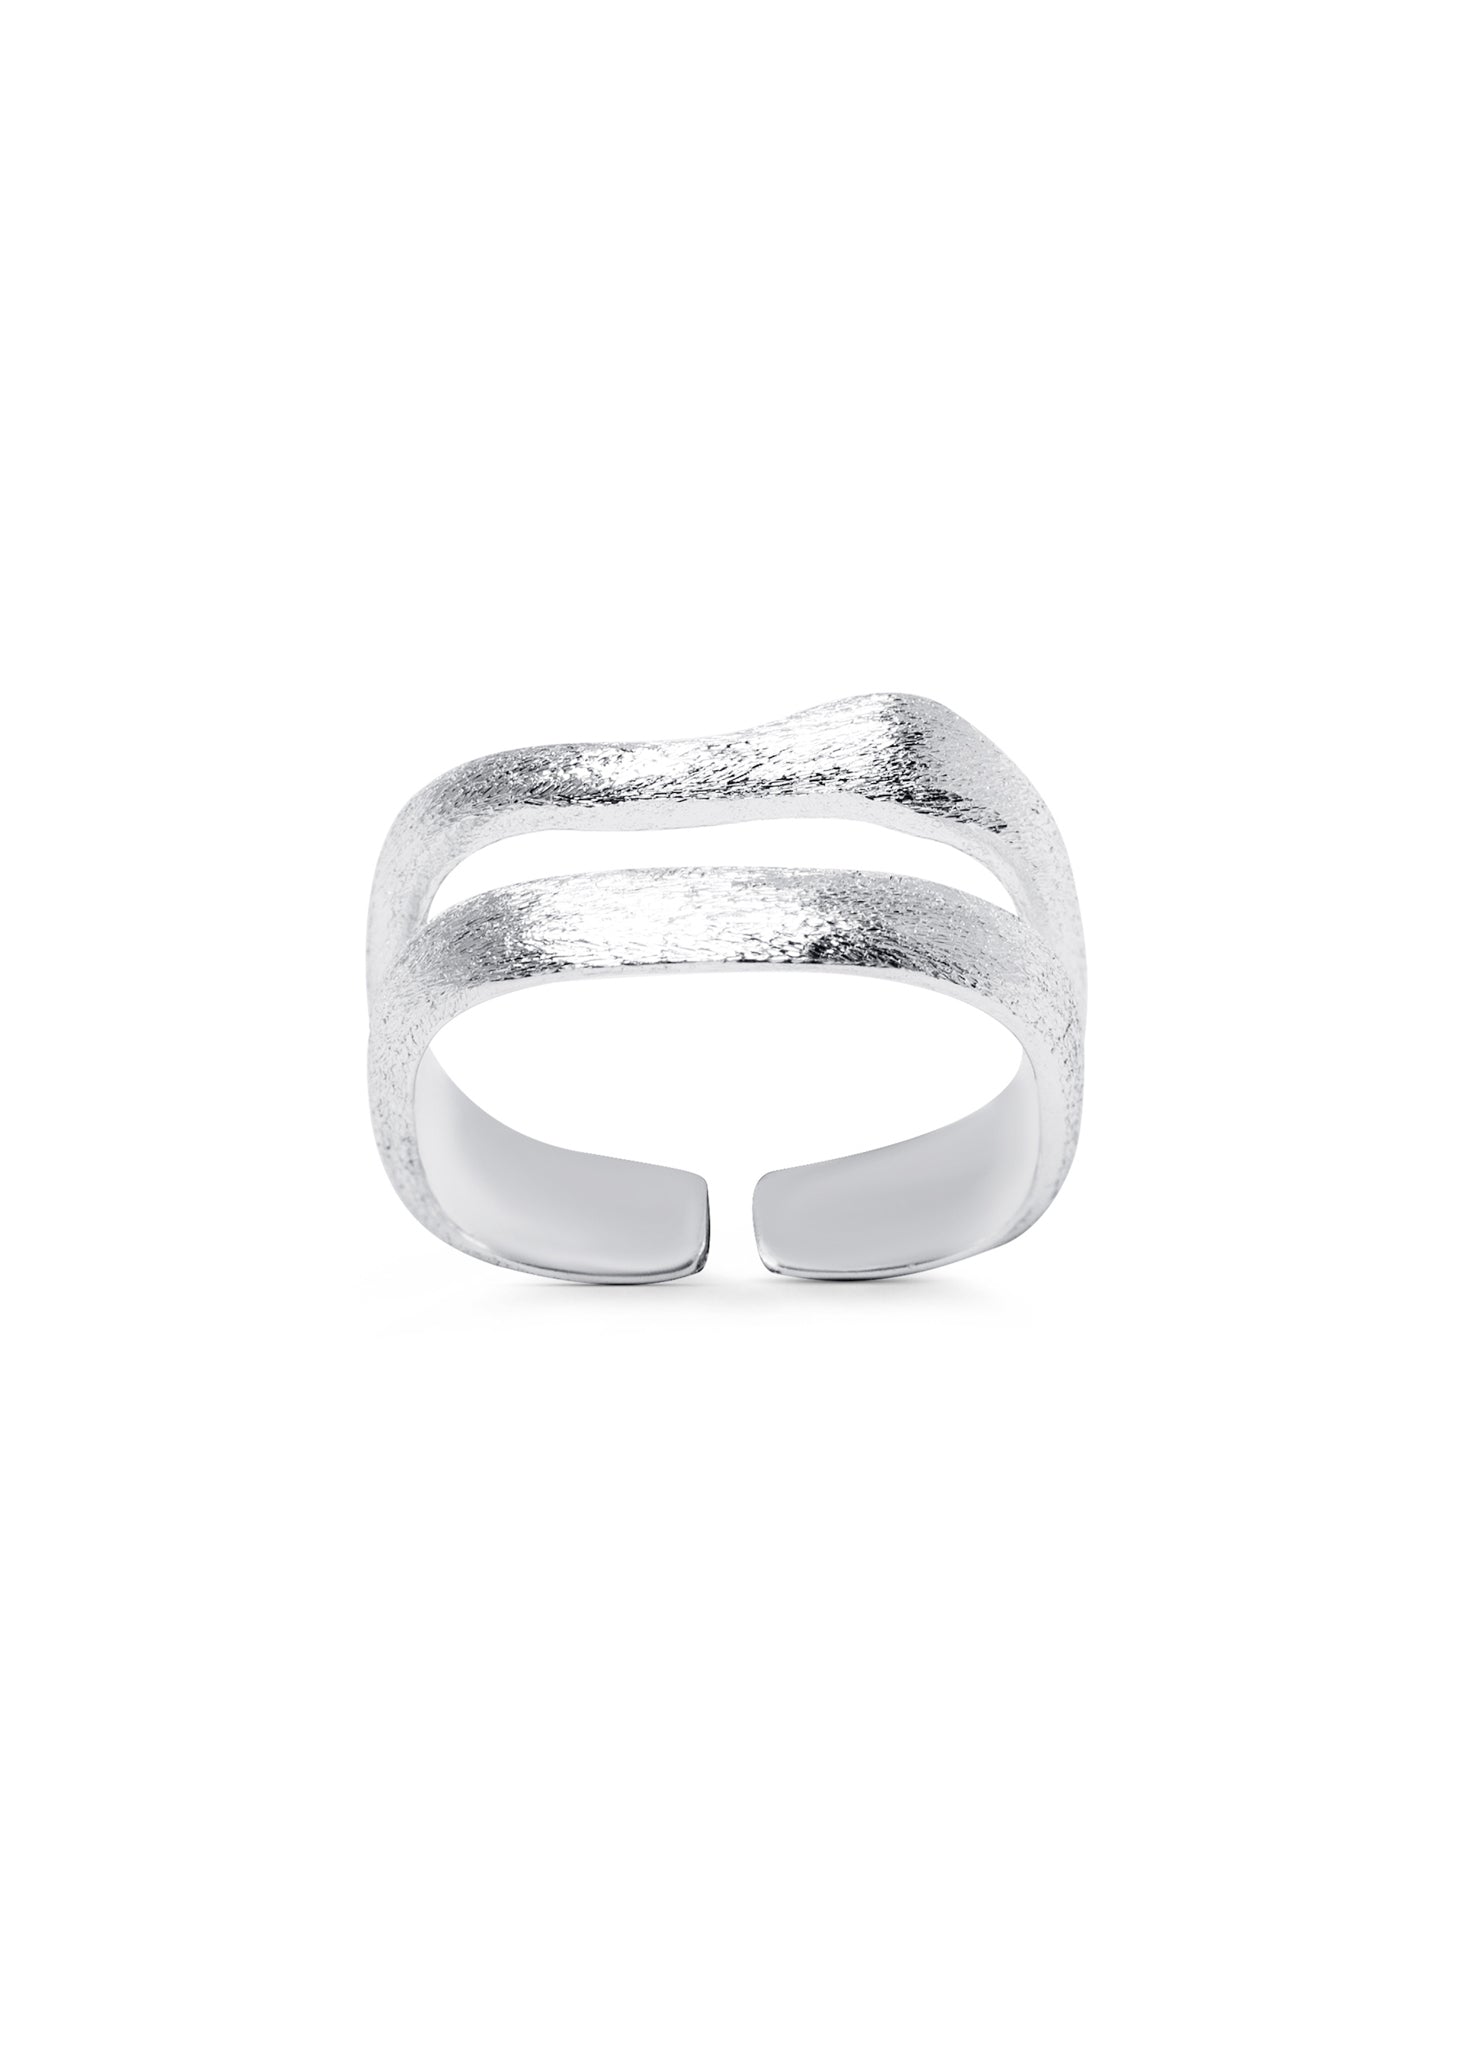 Silver satin ring